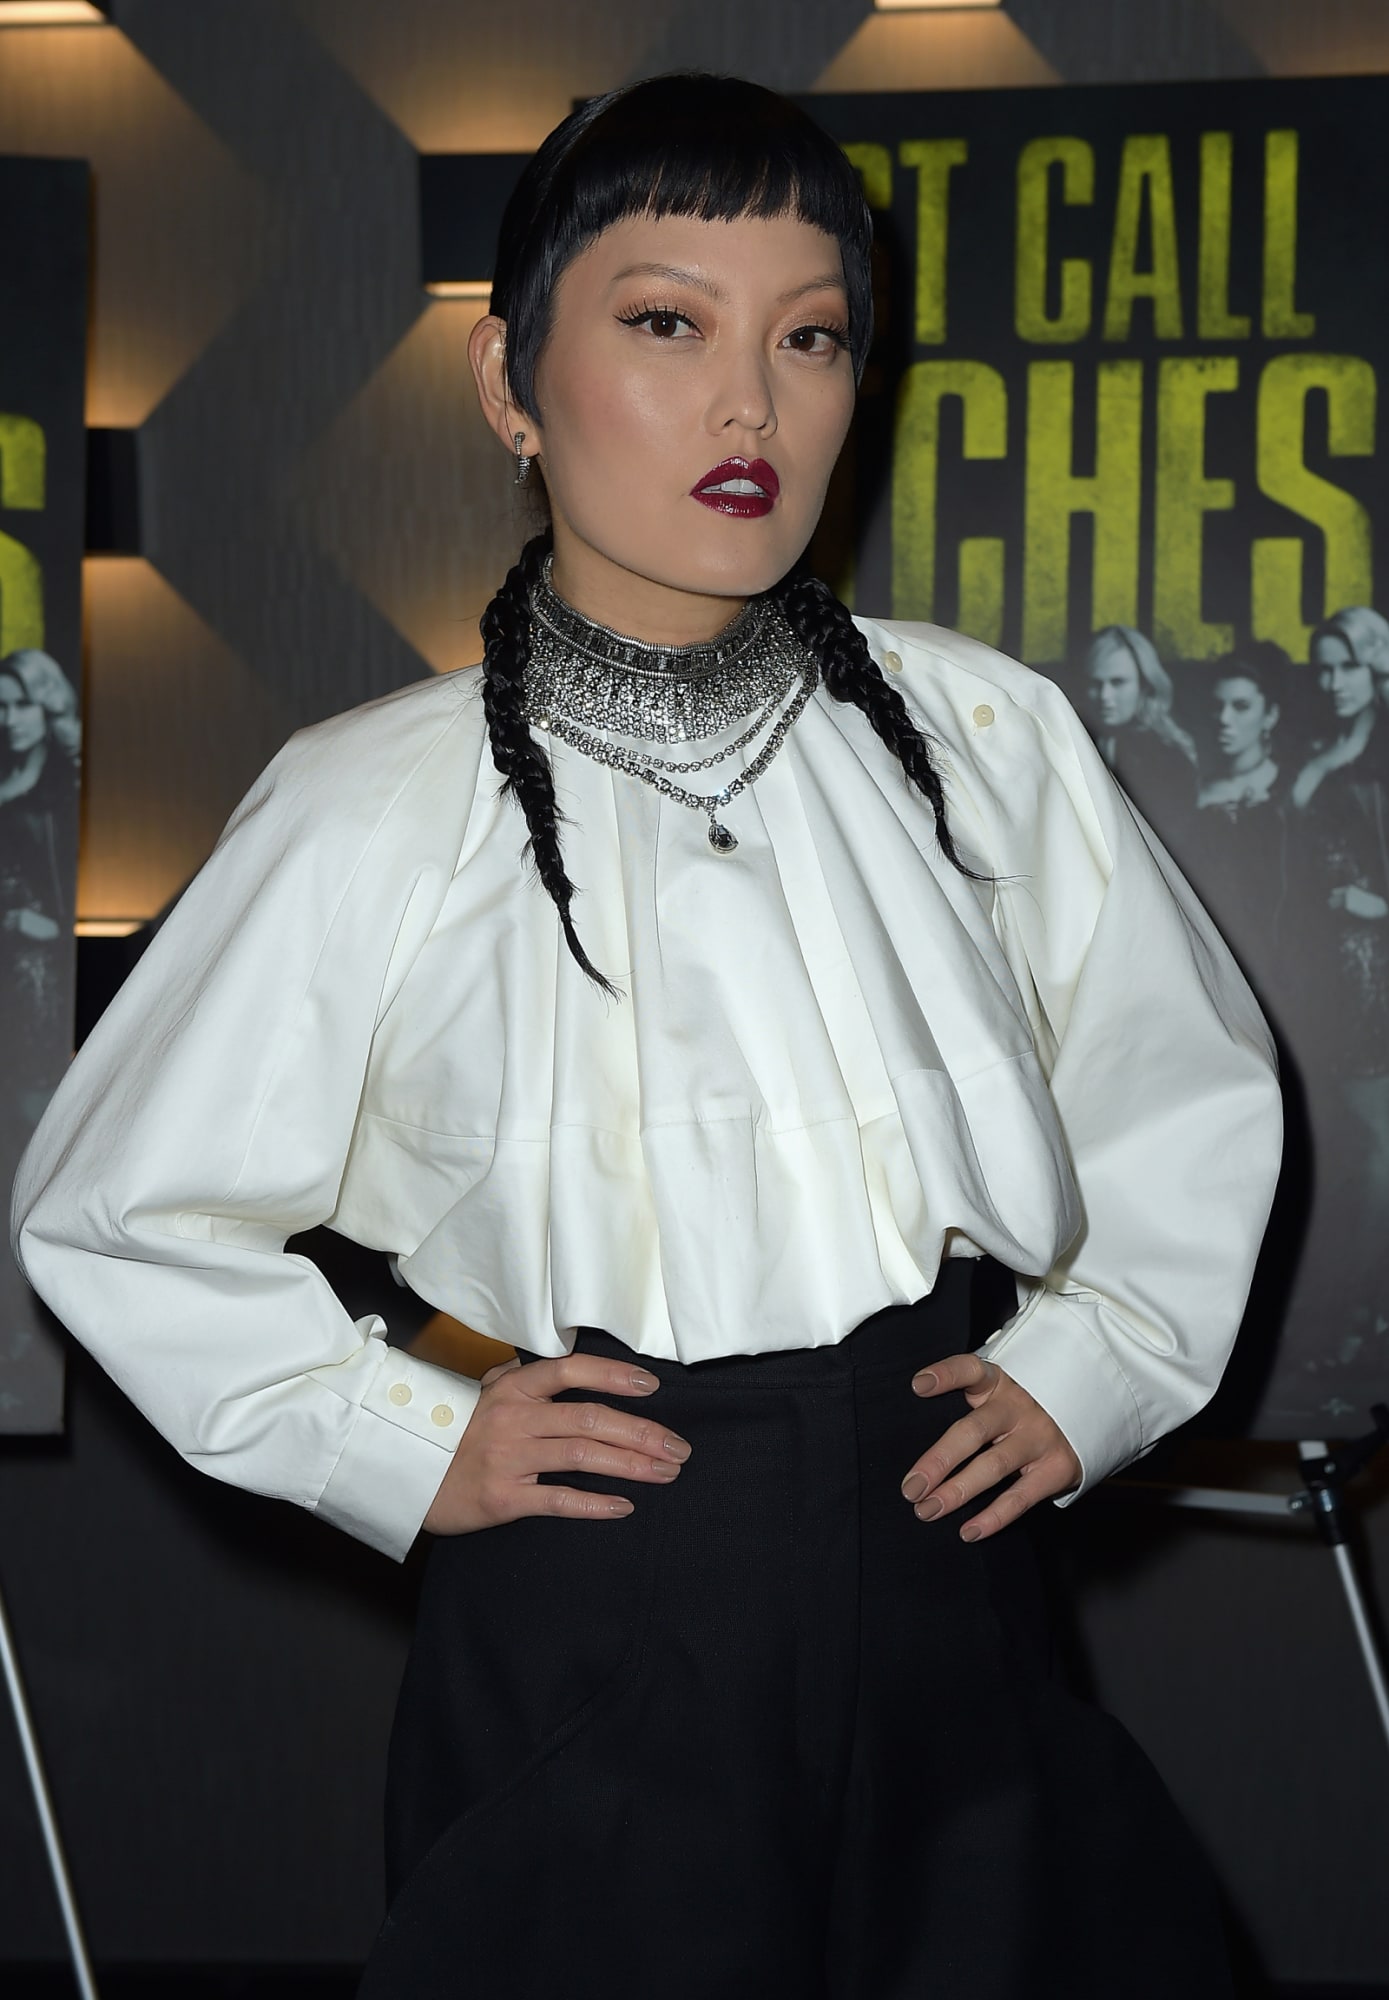 Hana Mae Lee Interview: Fashion, horror and Freddy Krueger